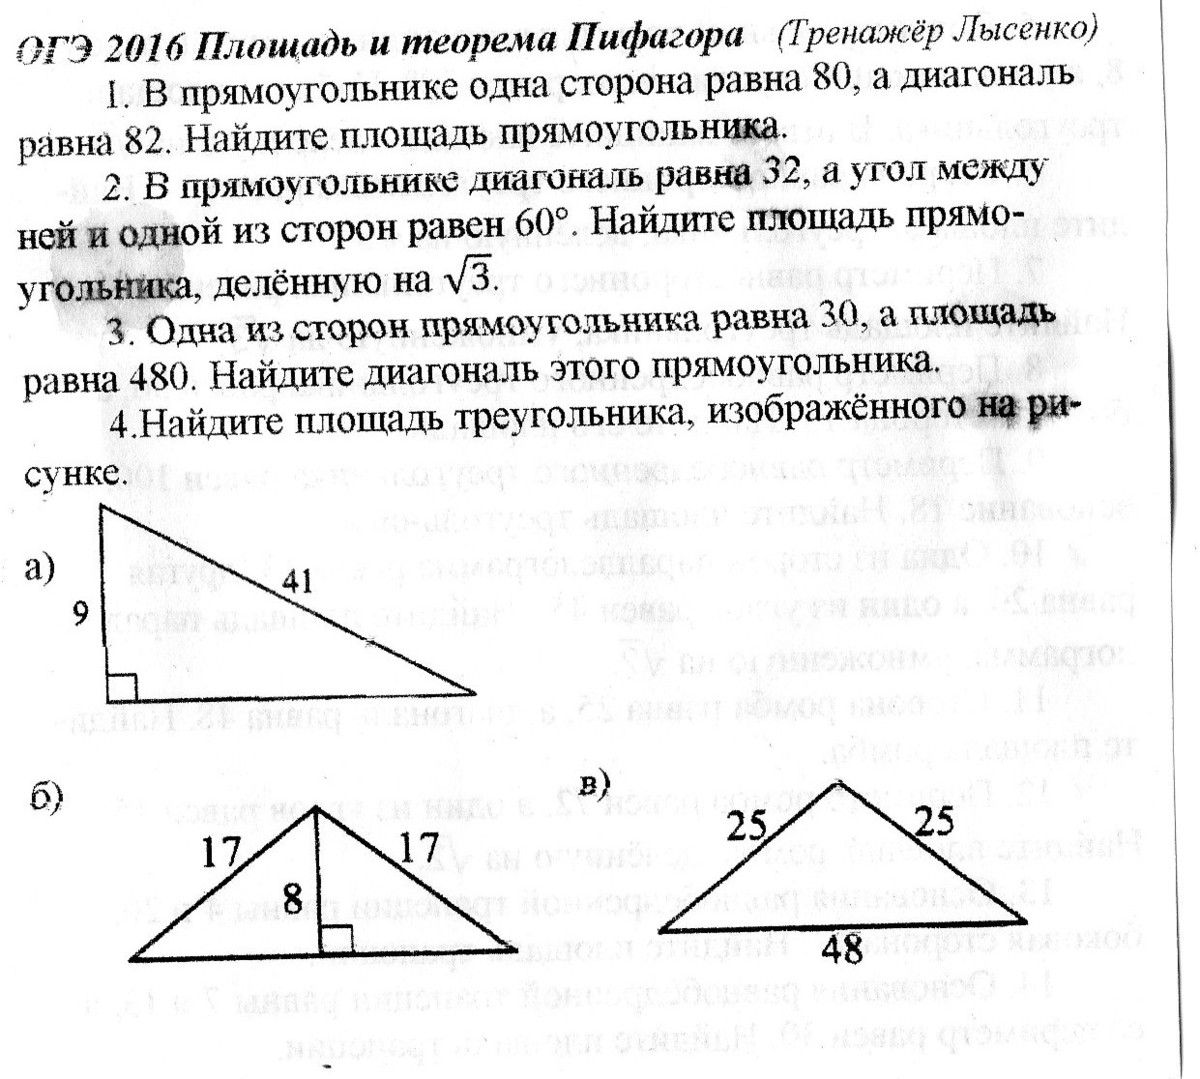 Огэ математика 9 класс пифагора. Задания на теорему Пифагора 8 класс. Решение задач по теореме Пифагора 8 класс. Задачи на теорему Пифагора 8 класс. Теорема Пифагора 8 класс задачи по готовым чертежам.